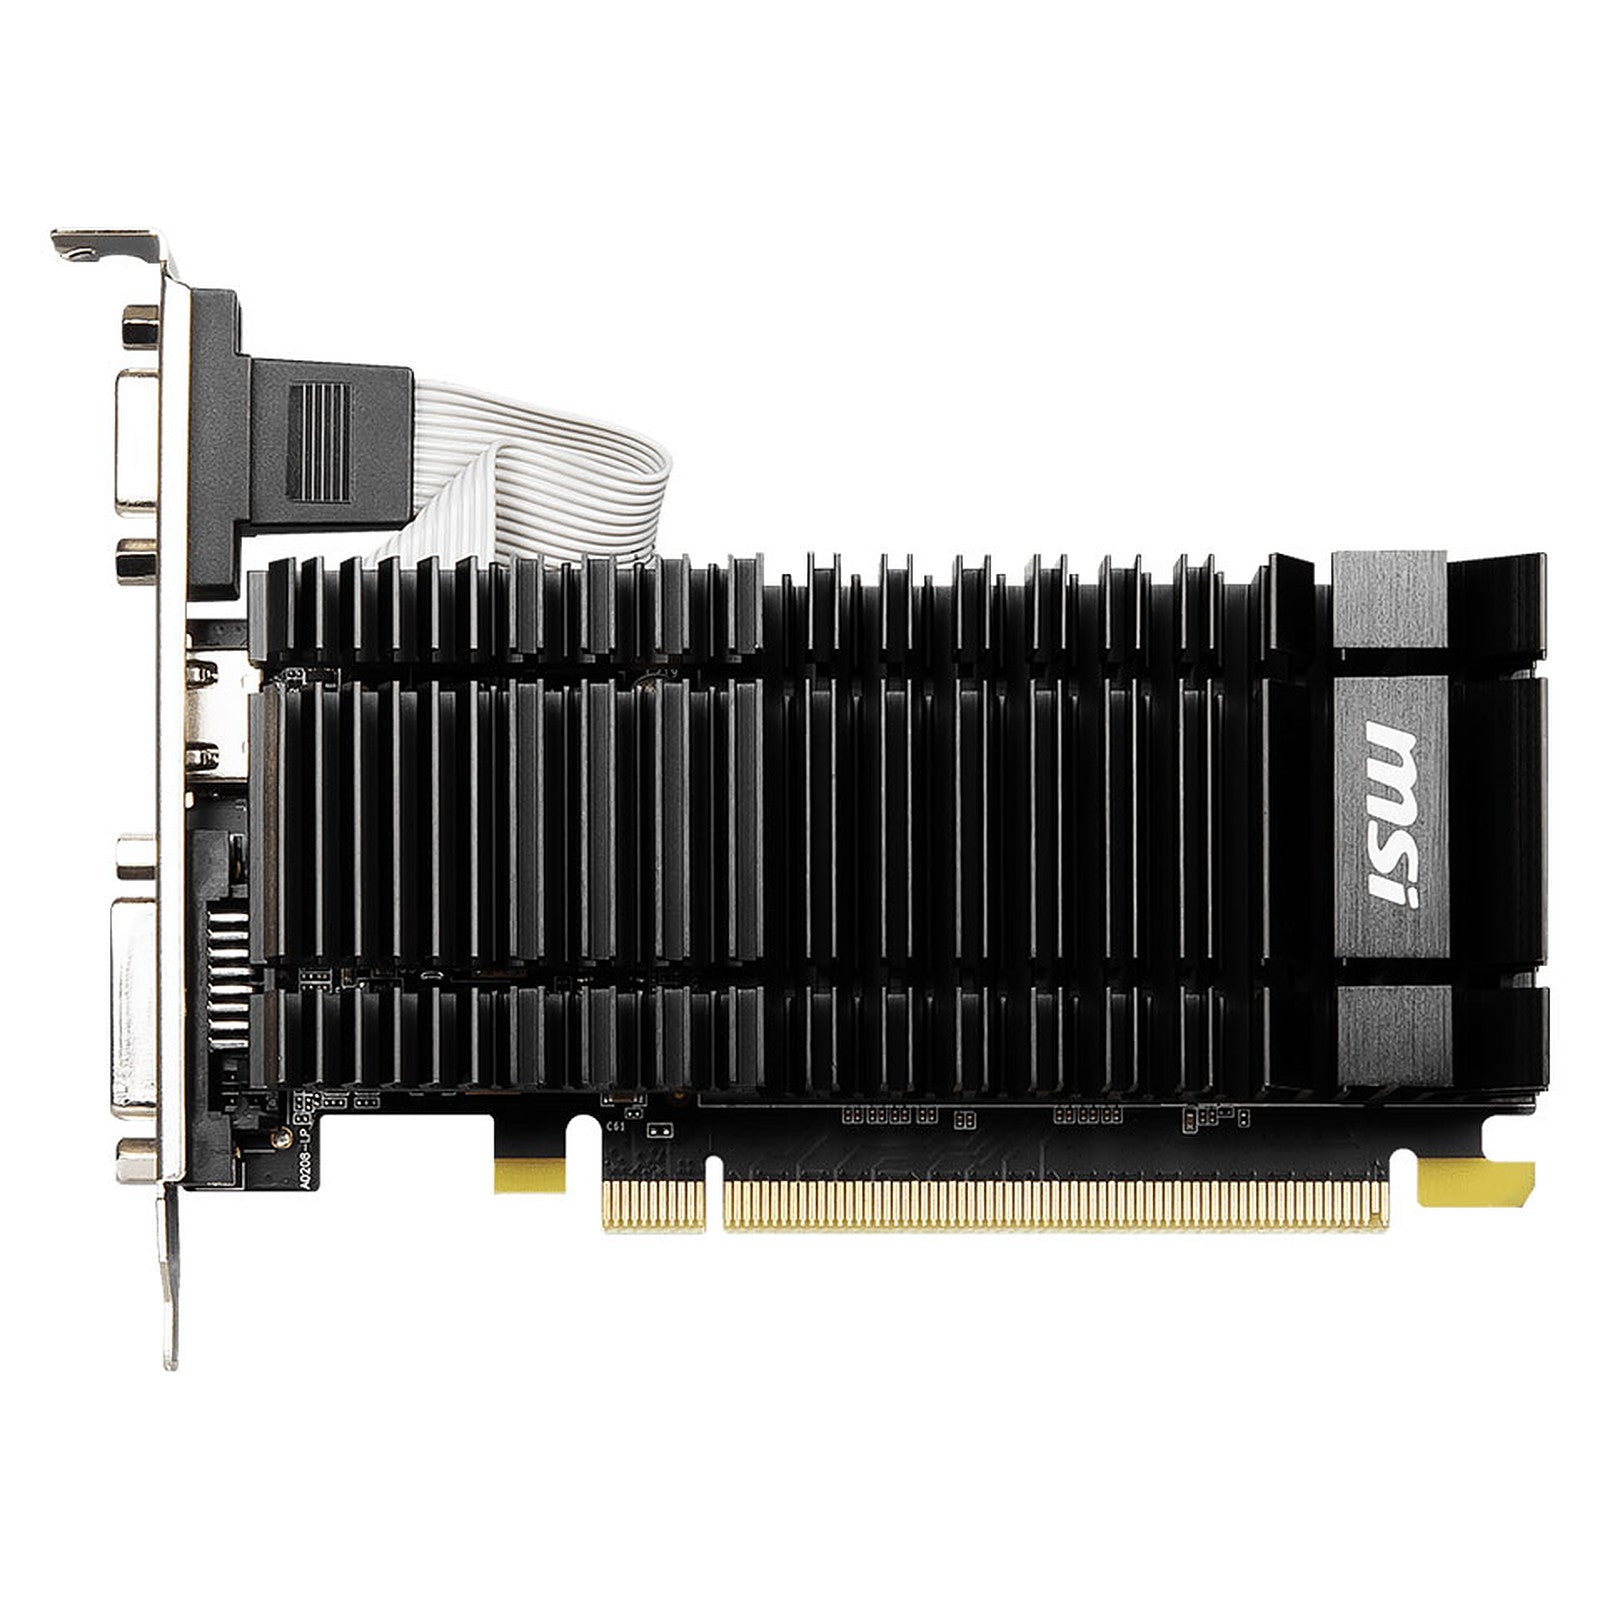 MSI - Carte graphique GeForce GT 730 N730K-2GD3H/LP